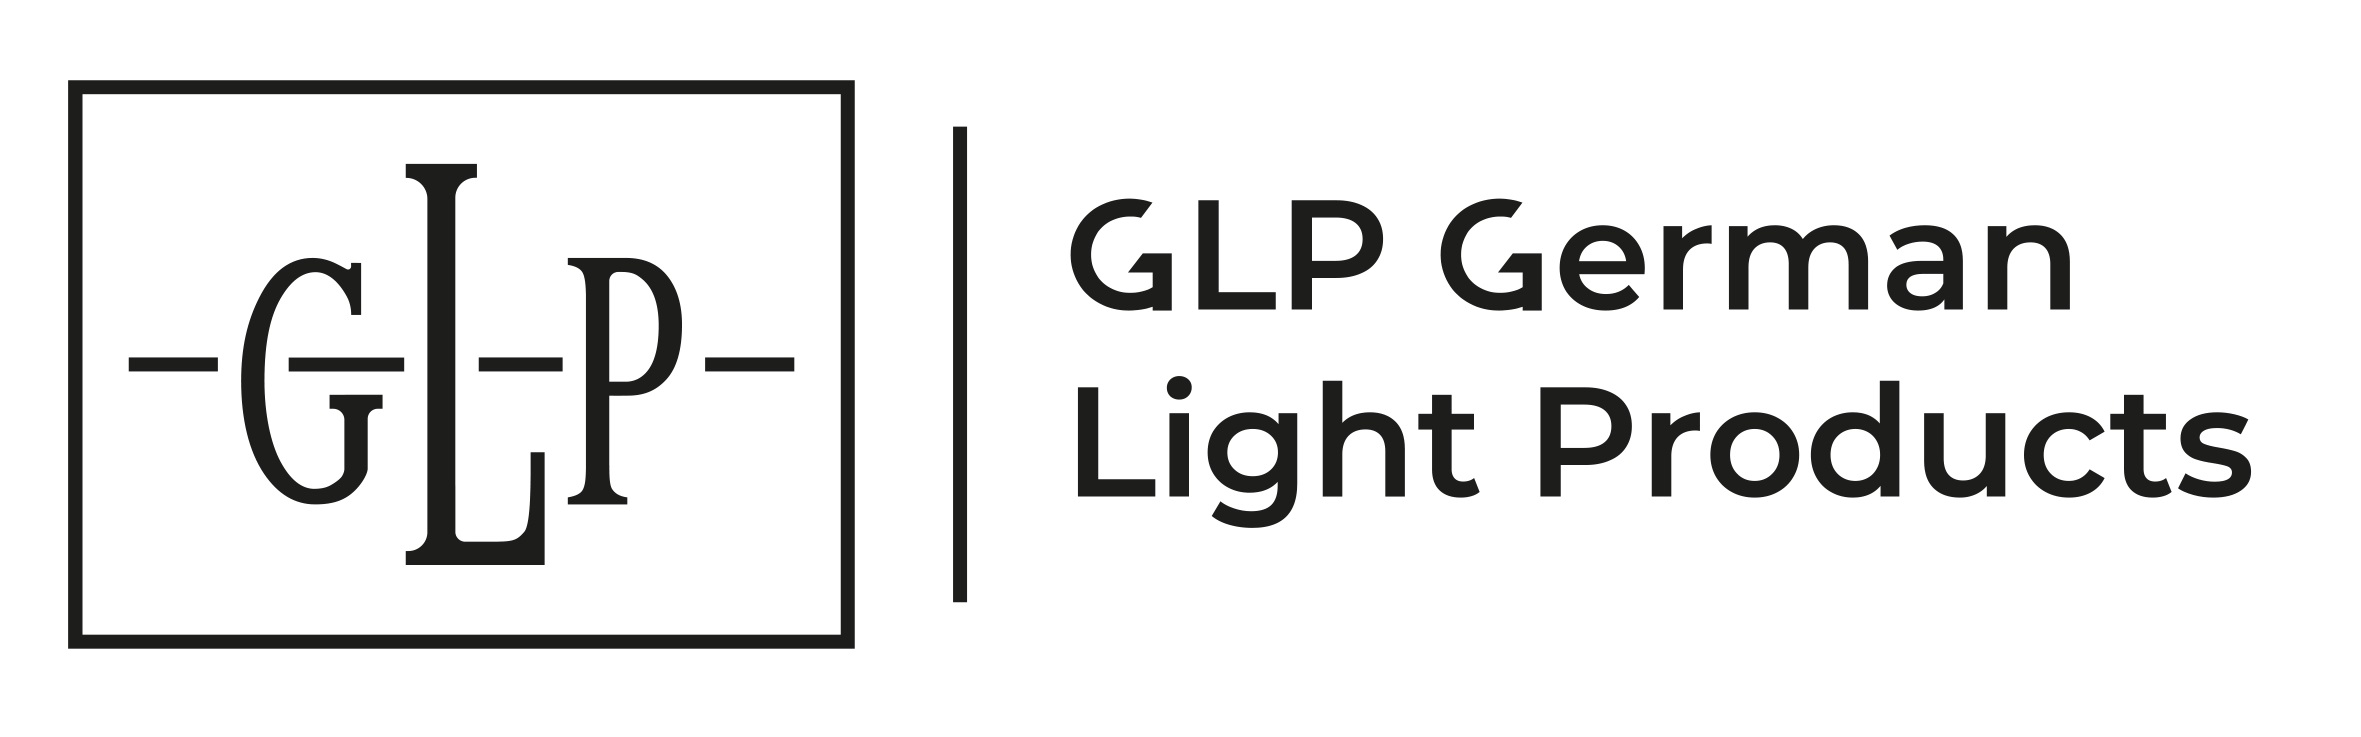 GLP German Light Products Inc